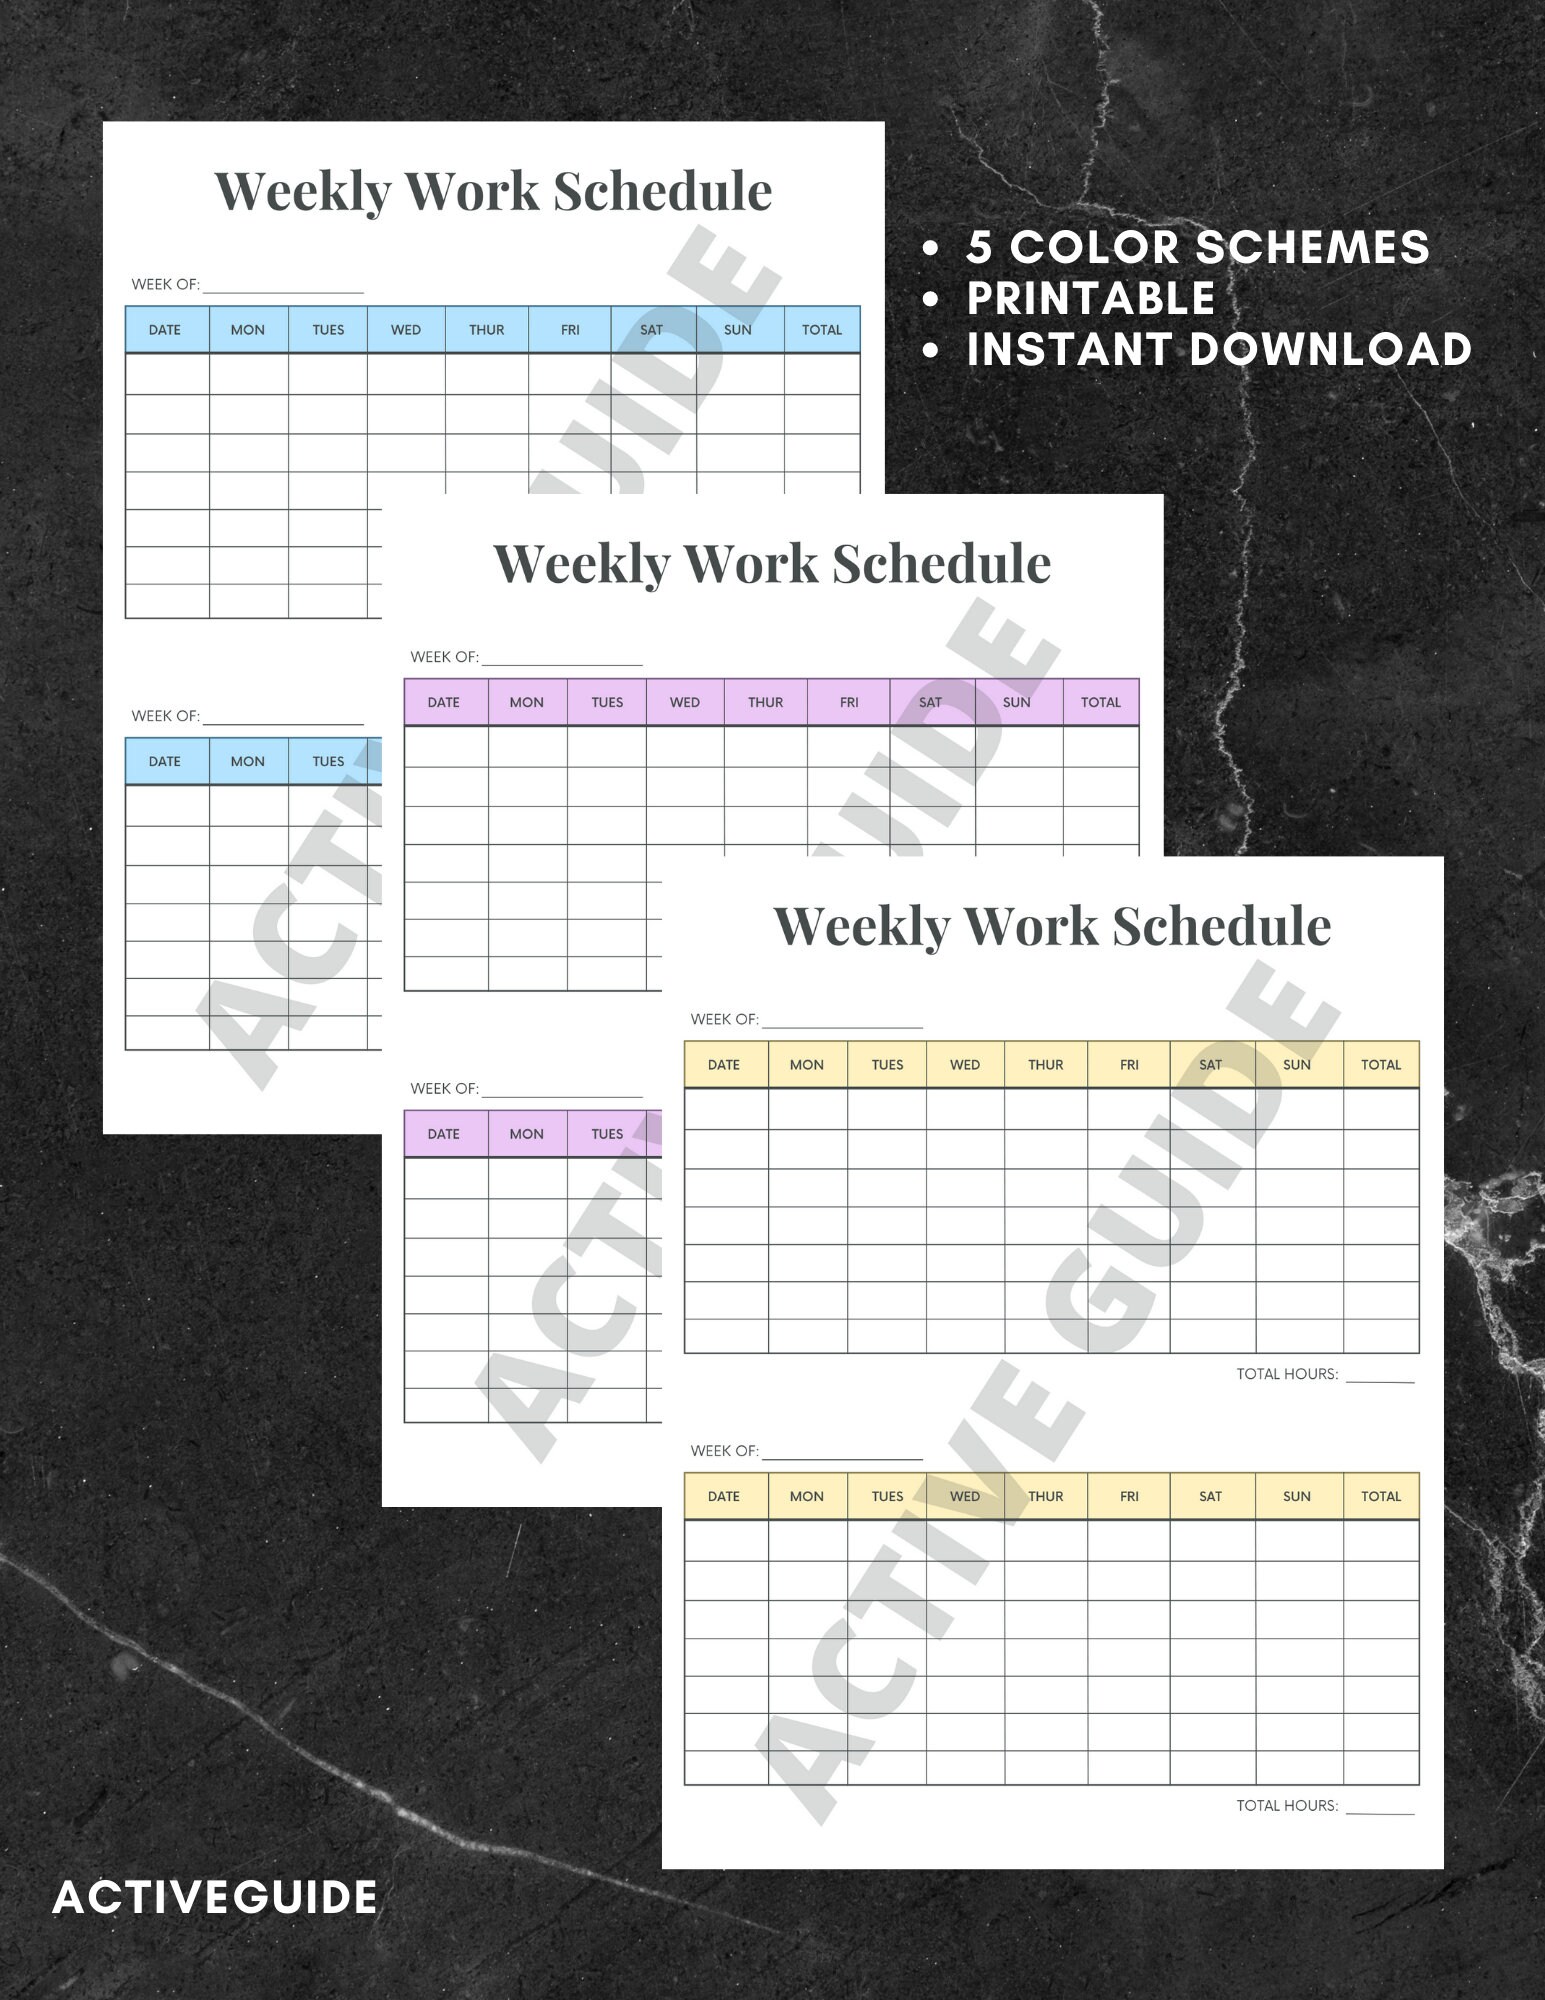 Weekly Work Schedule - Etsy